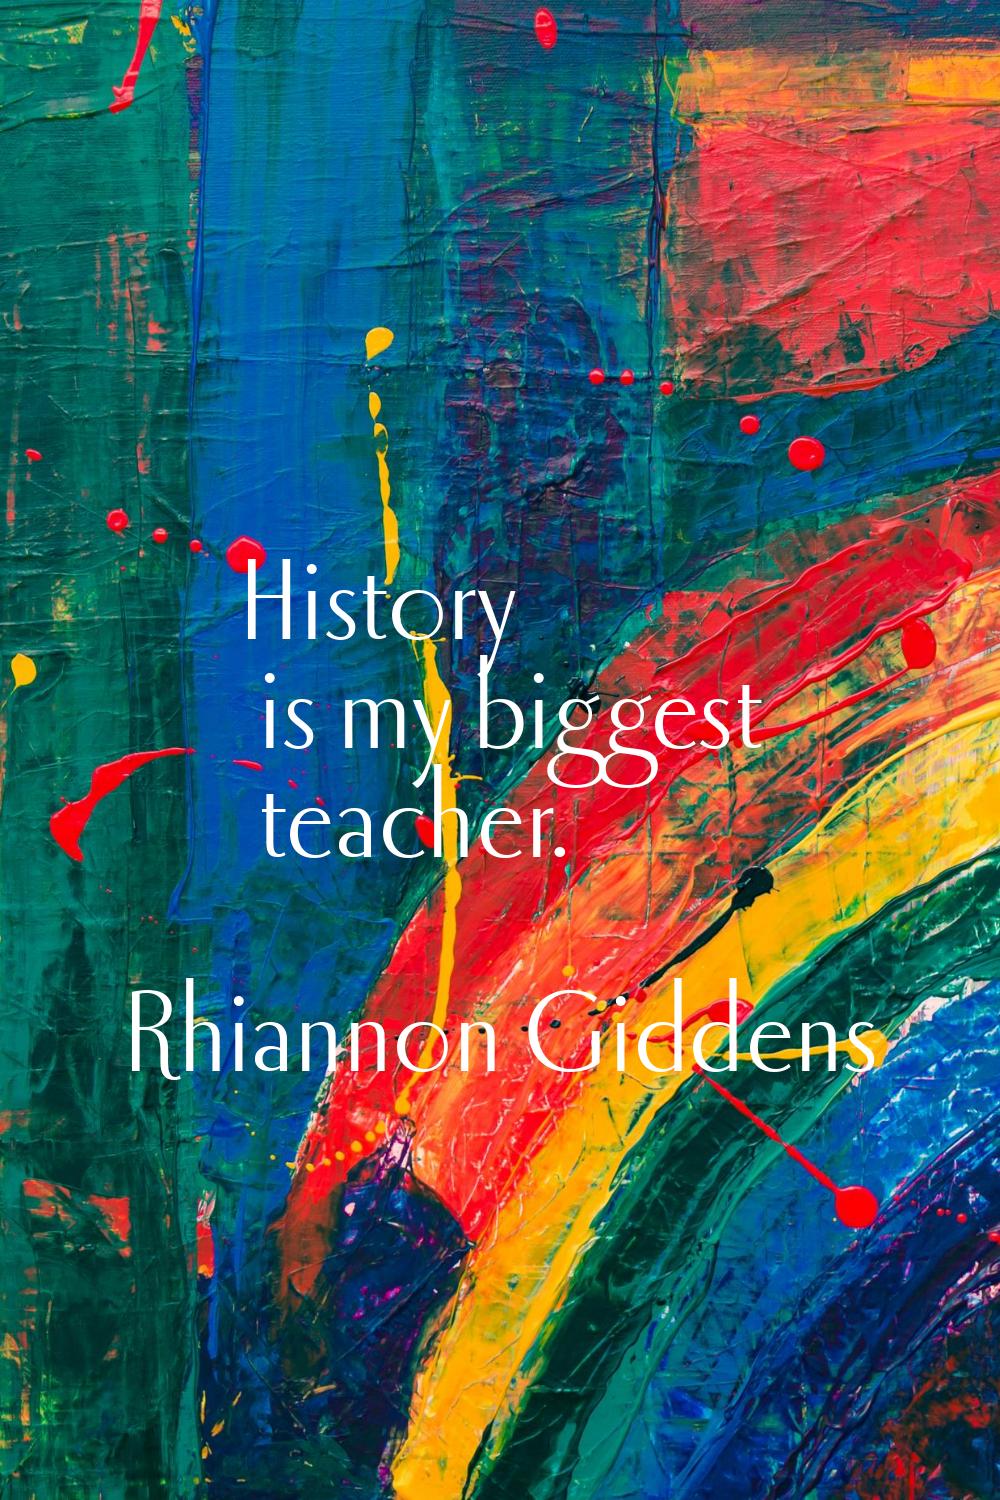 History is my biggest teacher.